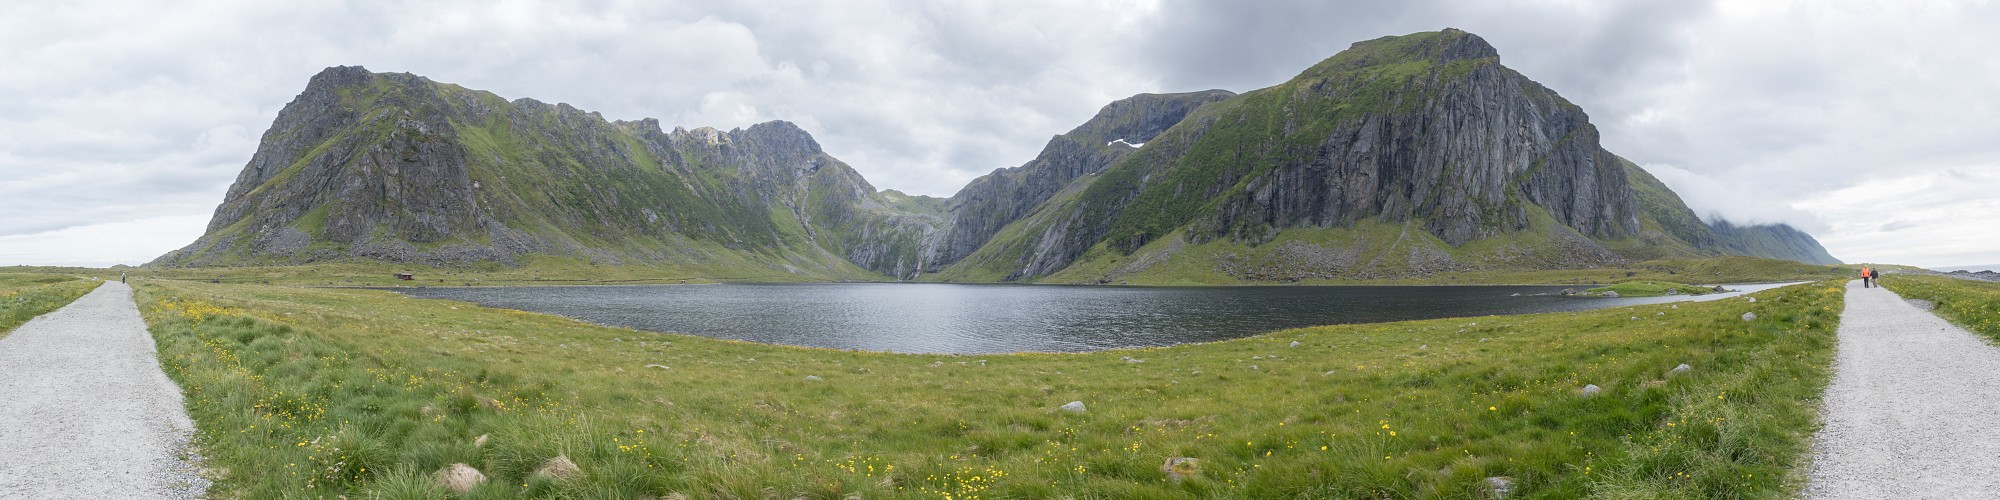 Heimredals Lake and Jellvollstinden (mountains)